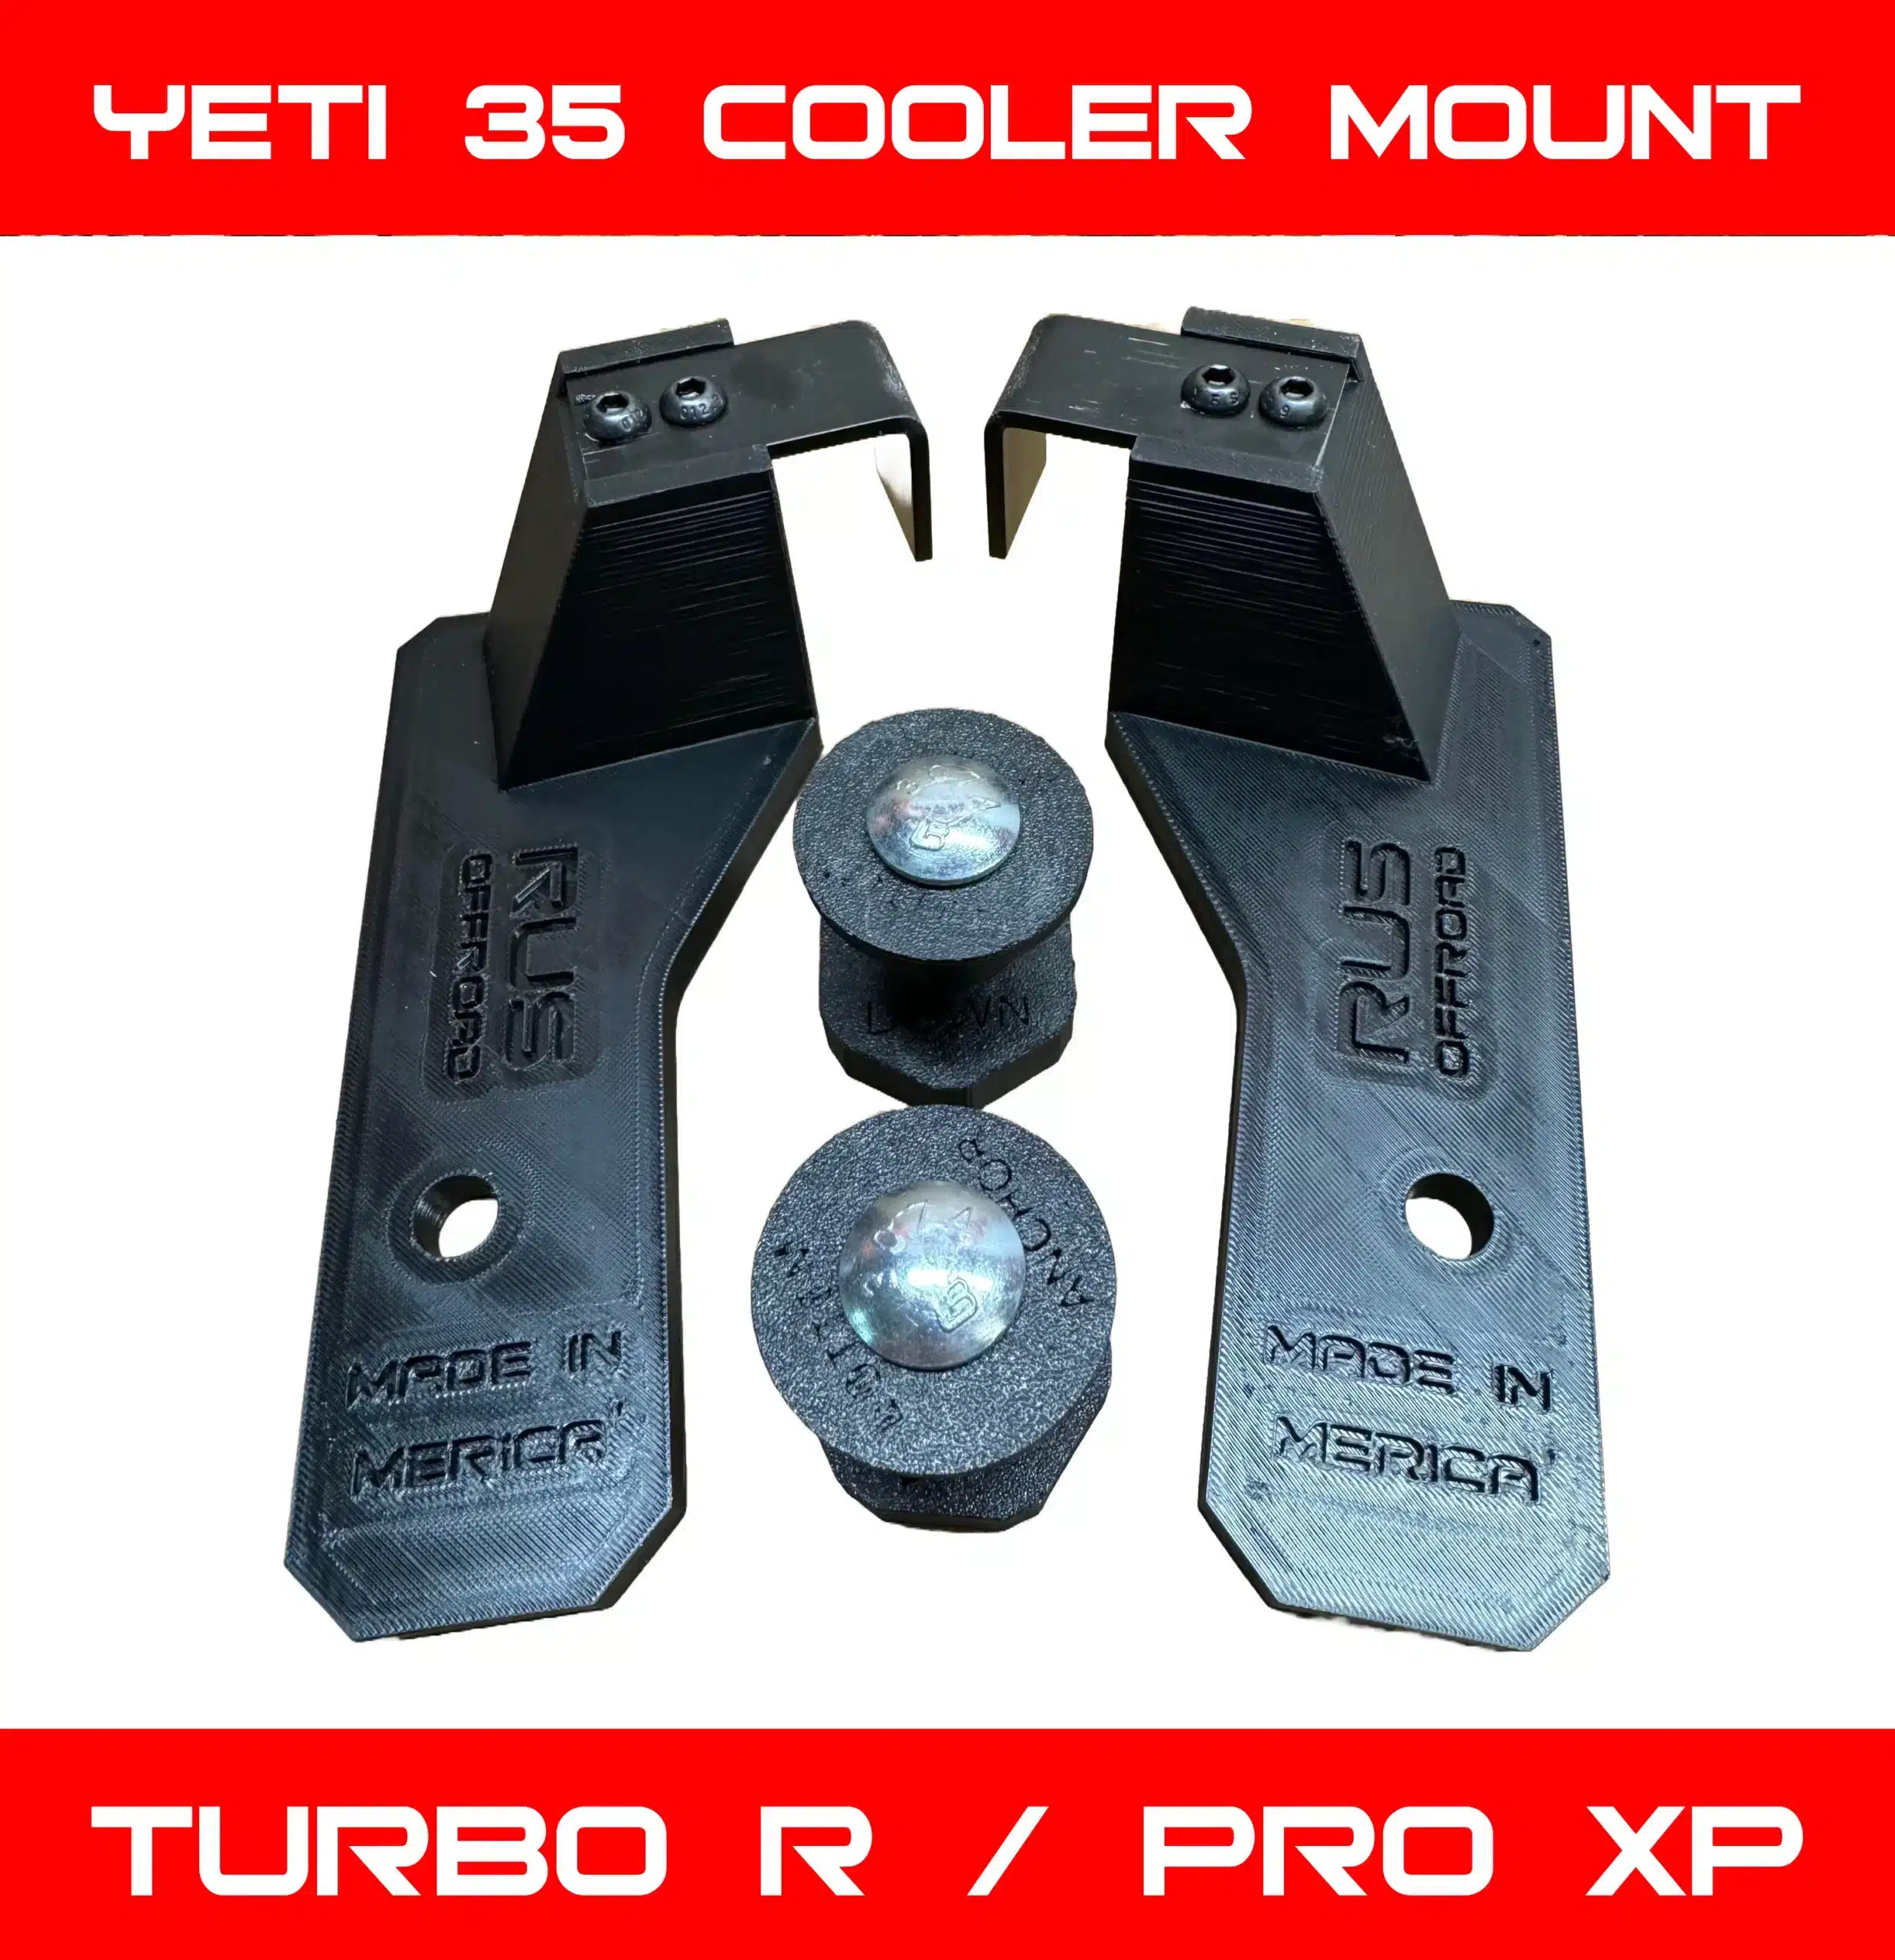 Turbo R – Pro XP